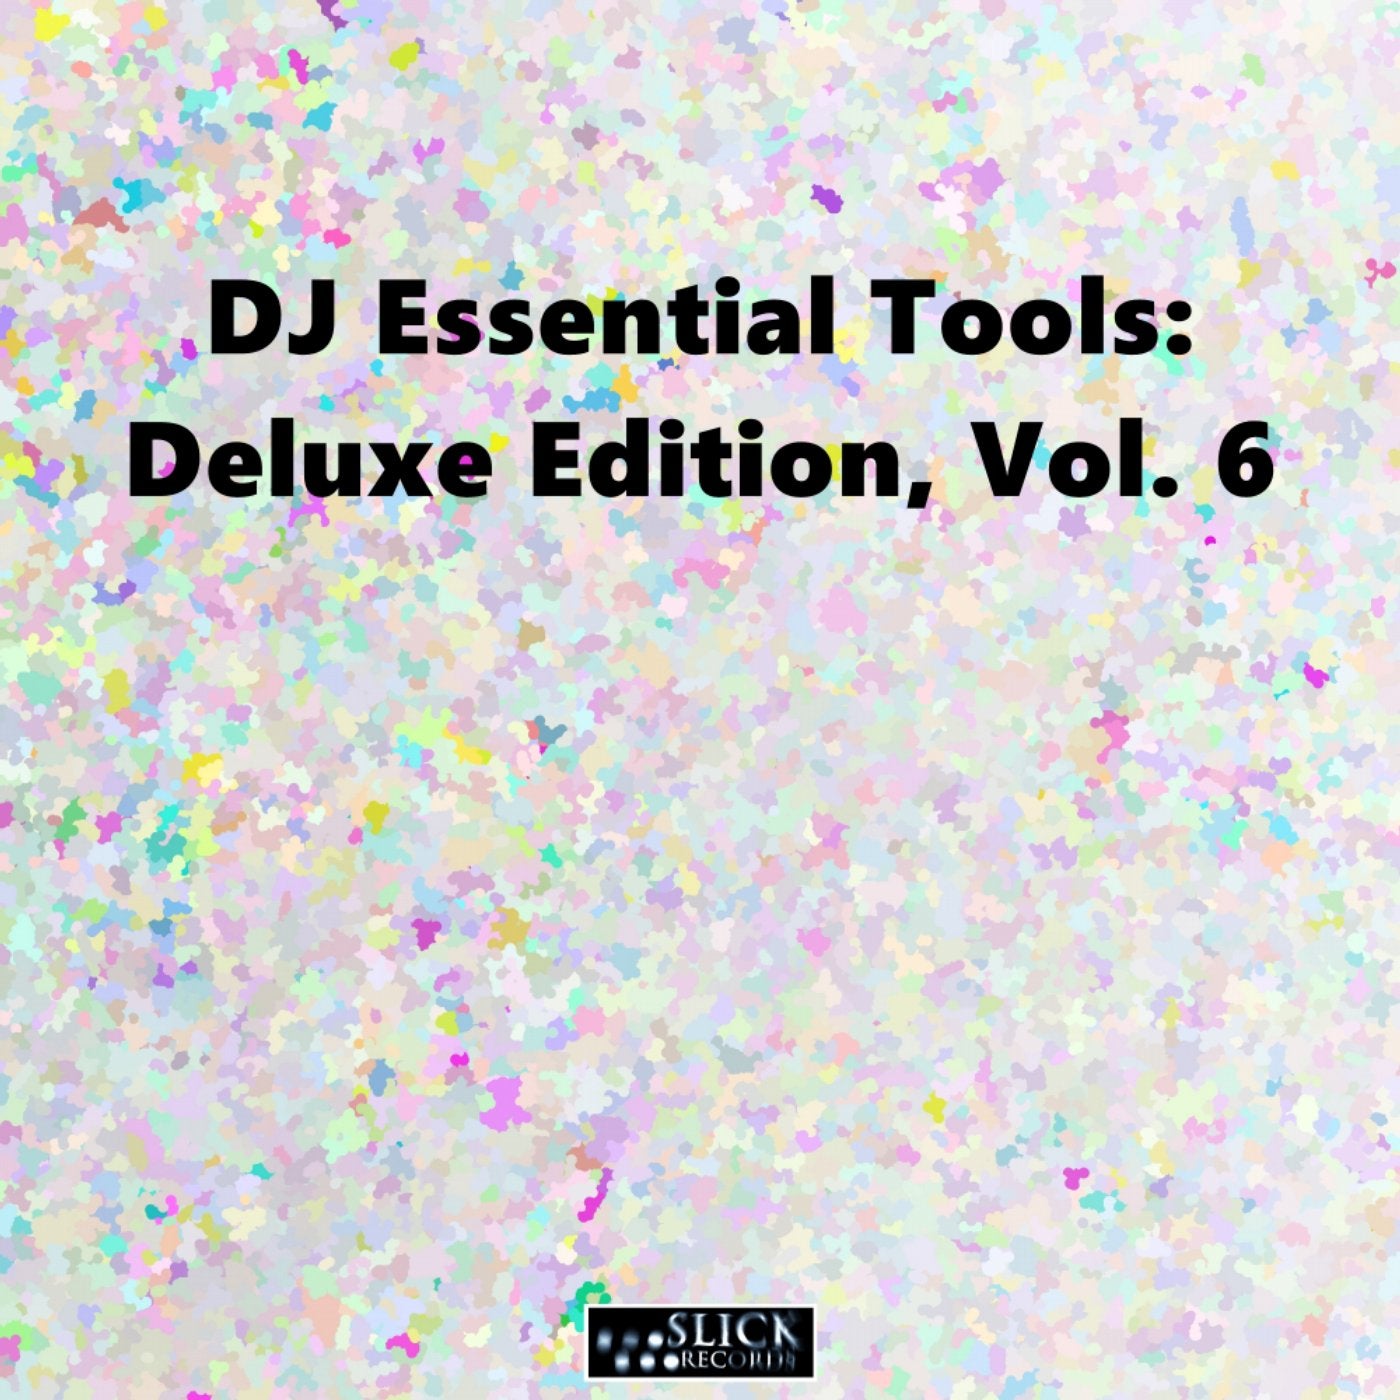 DJ Essential Tools: Deluxe Edition, Vol. 6